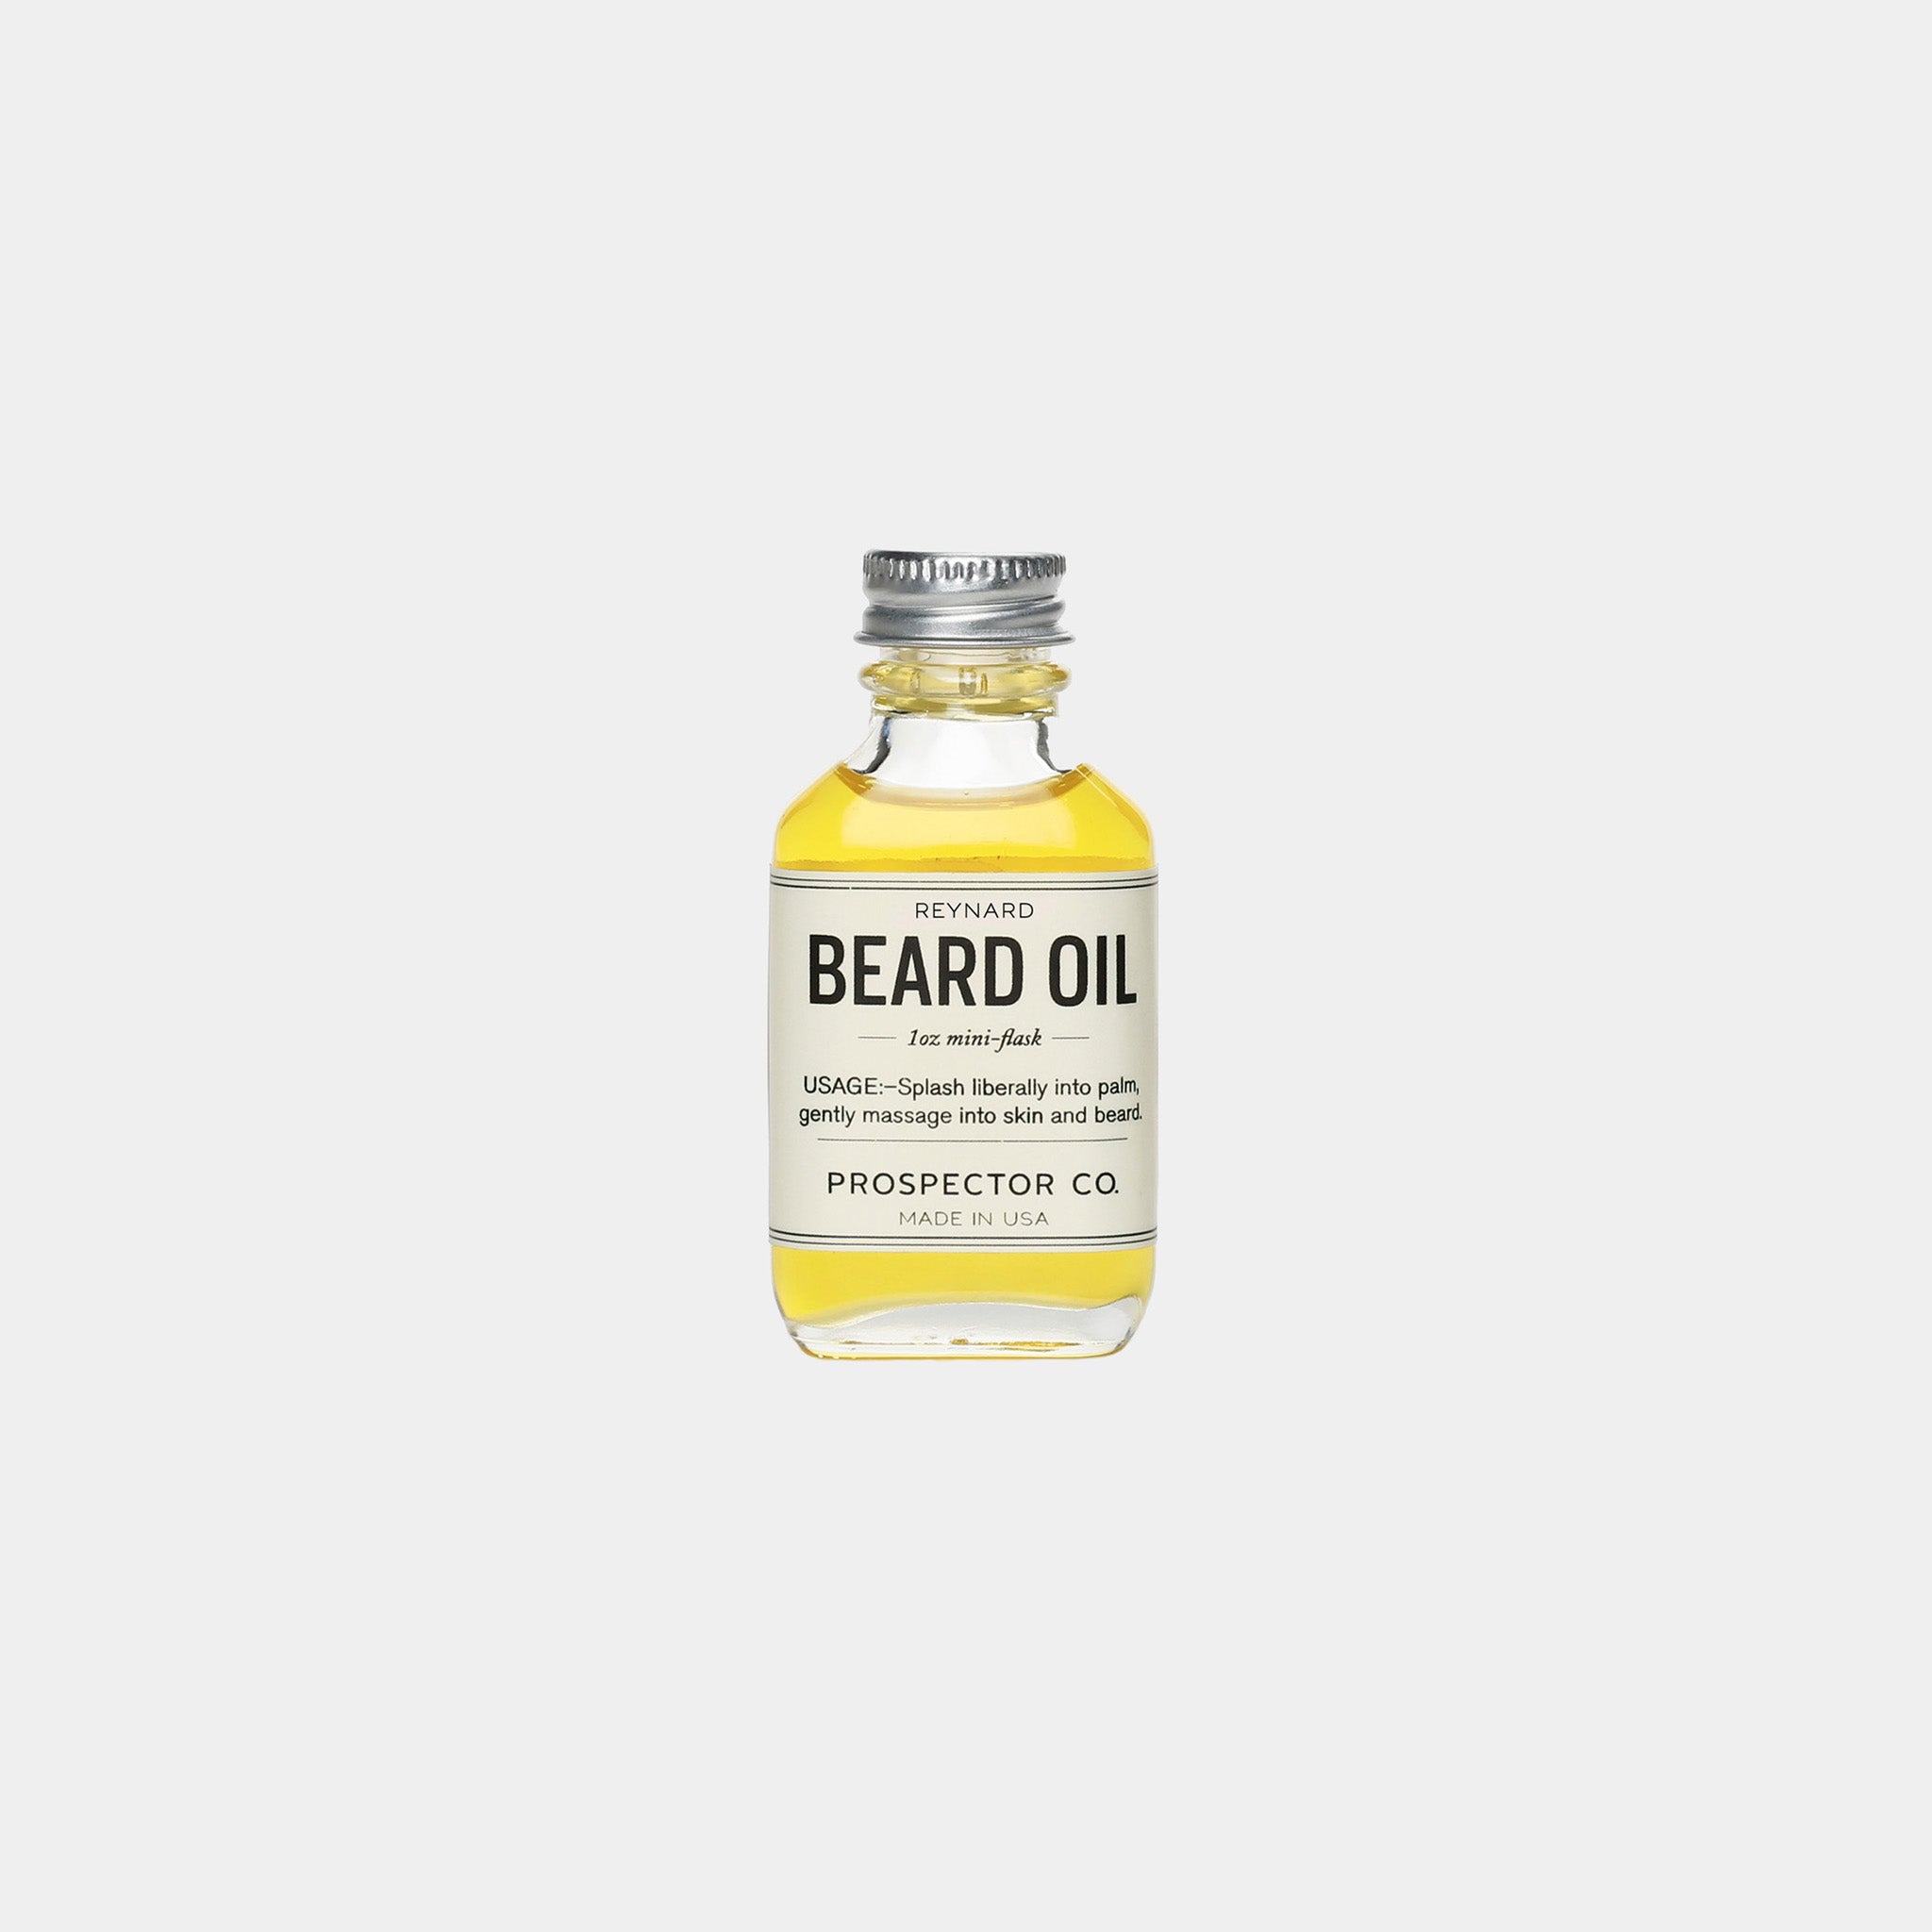 Reynard Beard Oil